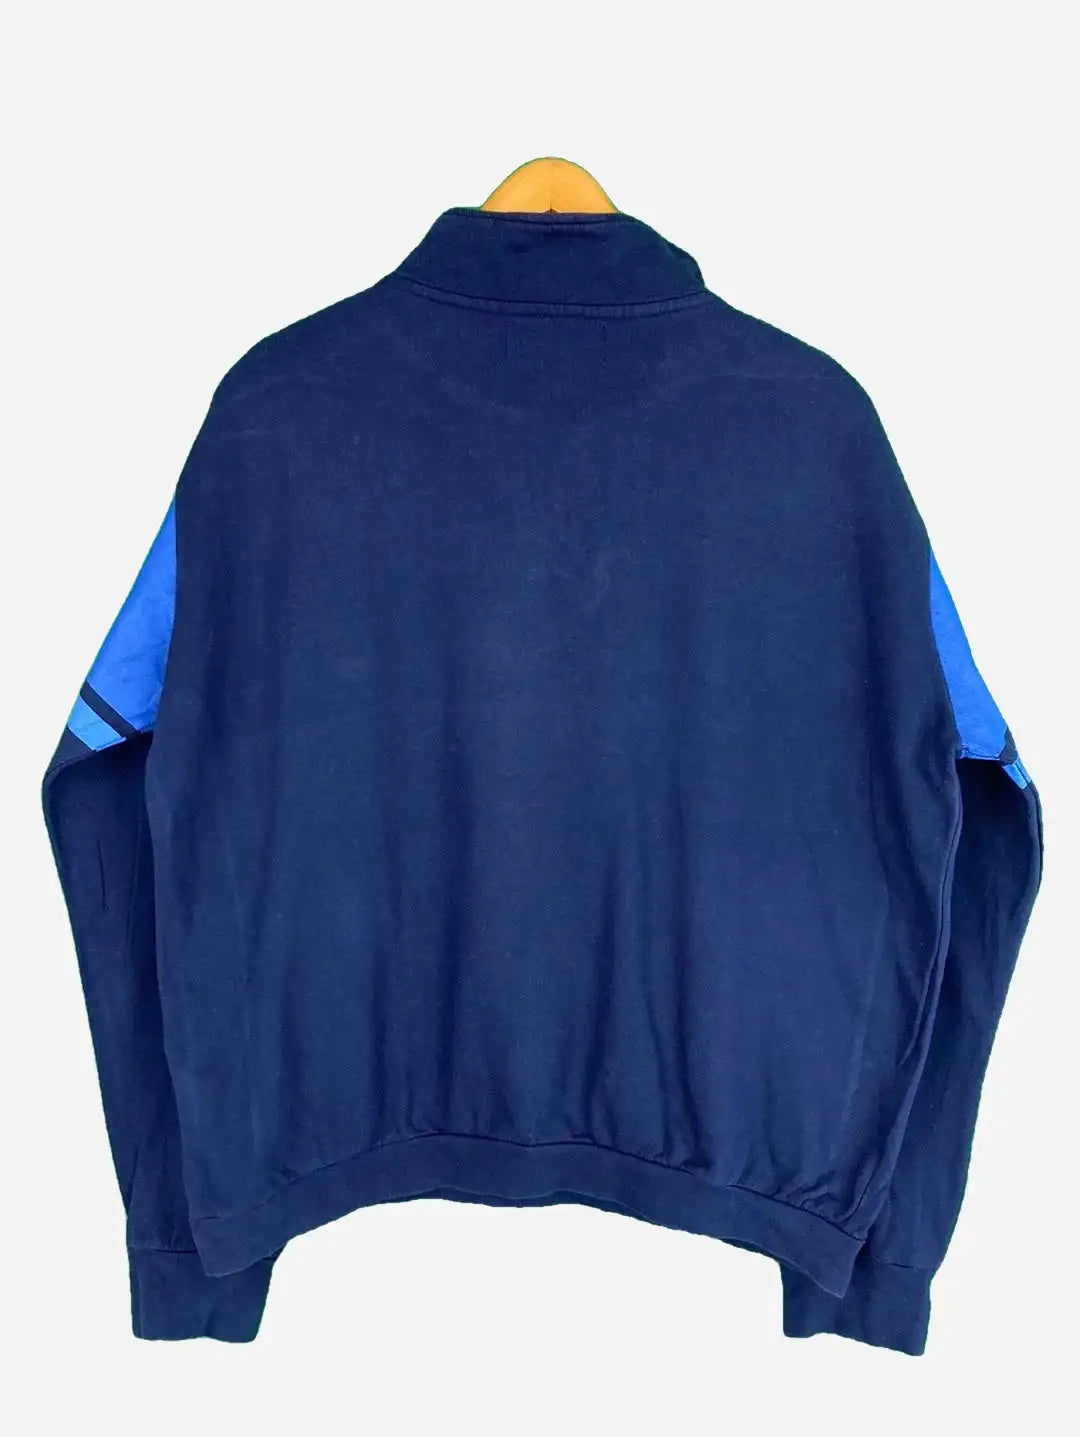 Kappa Halfzip Sweater (M)